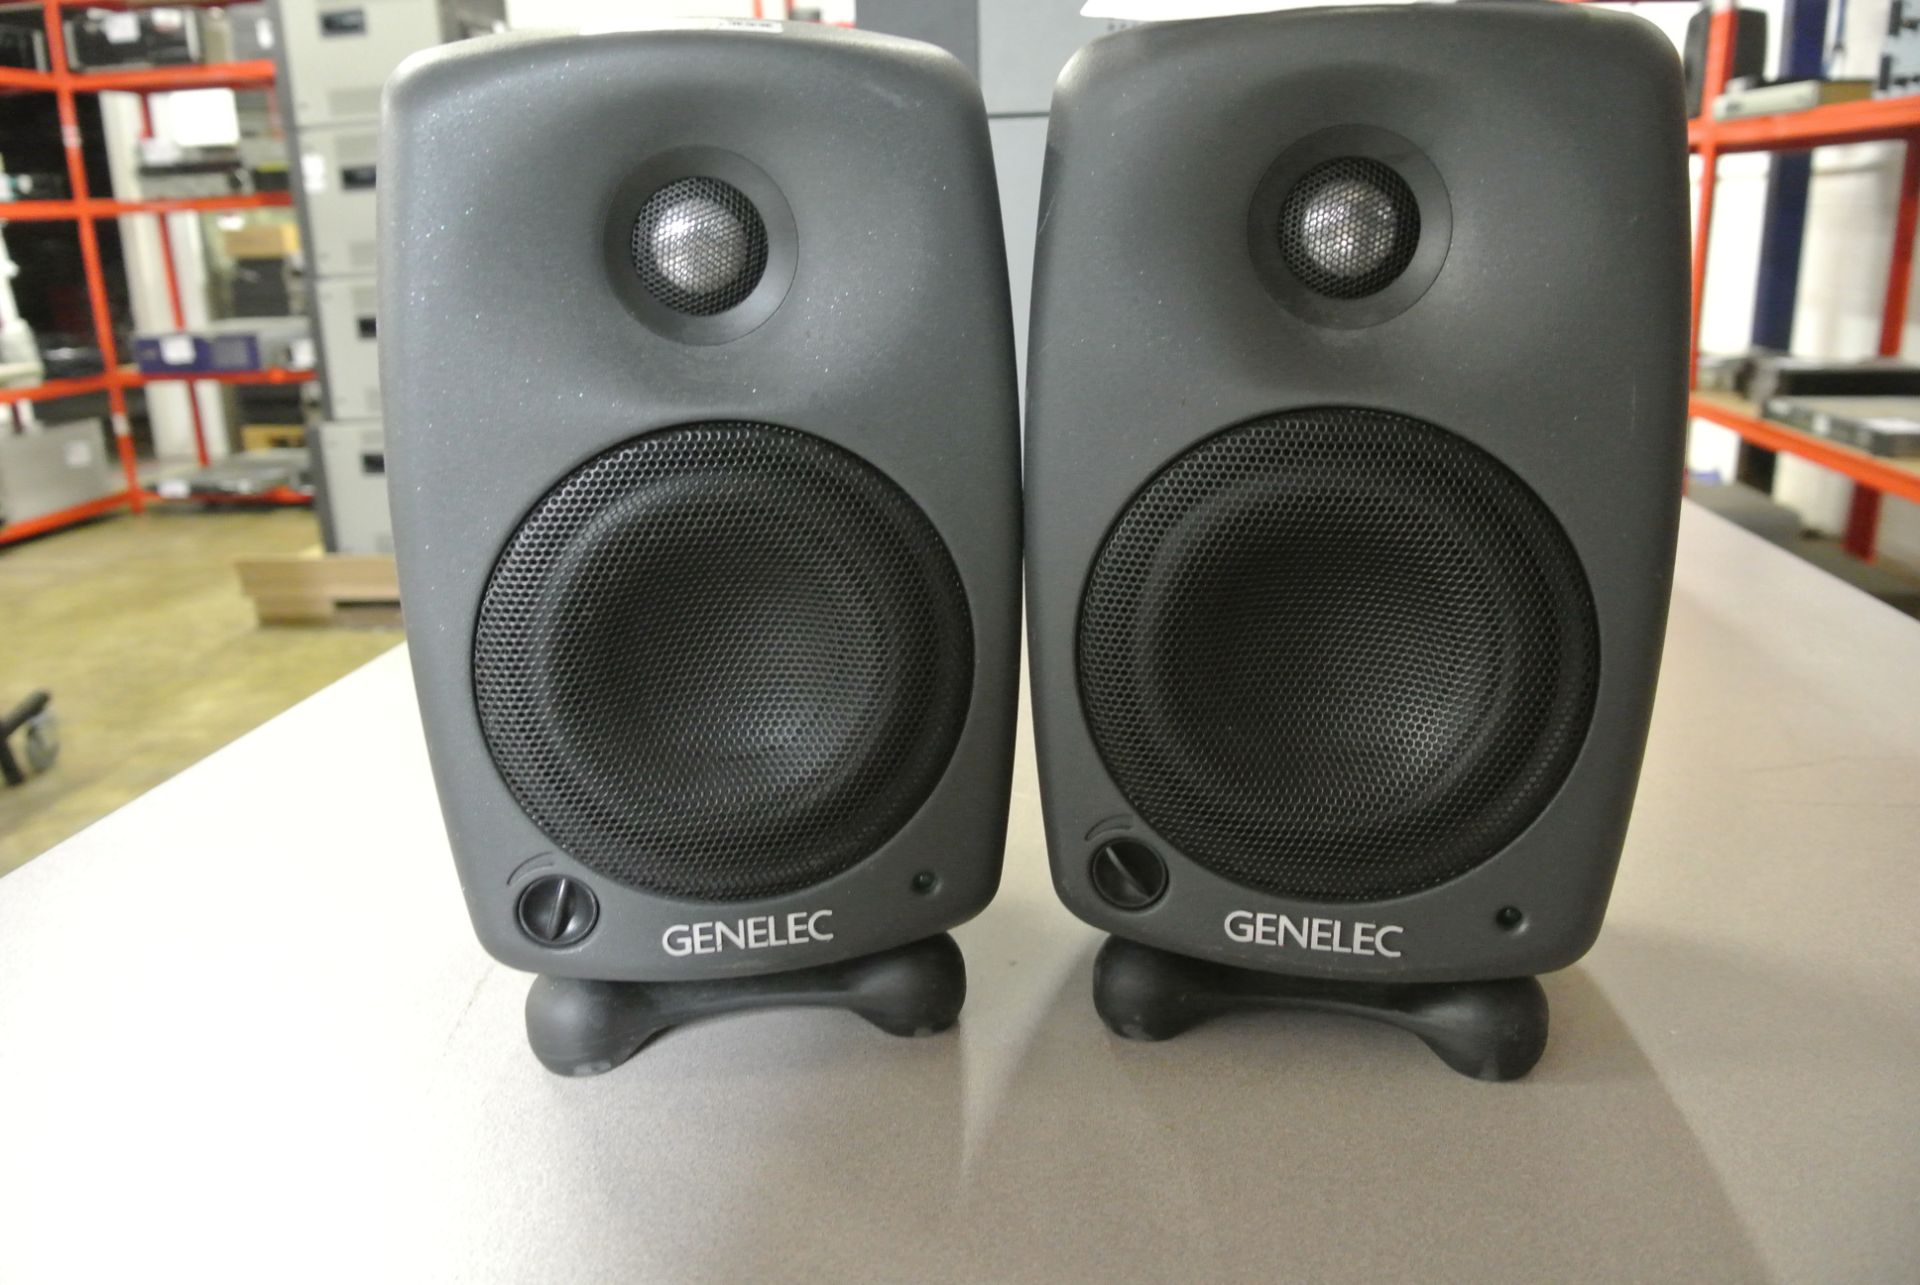 Genelec 8020A Studio Monitor Speaker - Pair of Black Active Studio Monitor Speakers